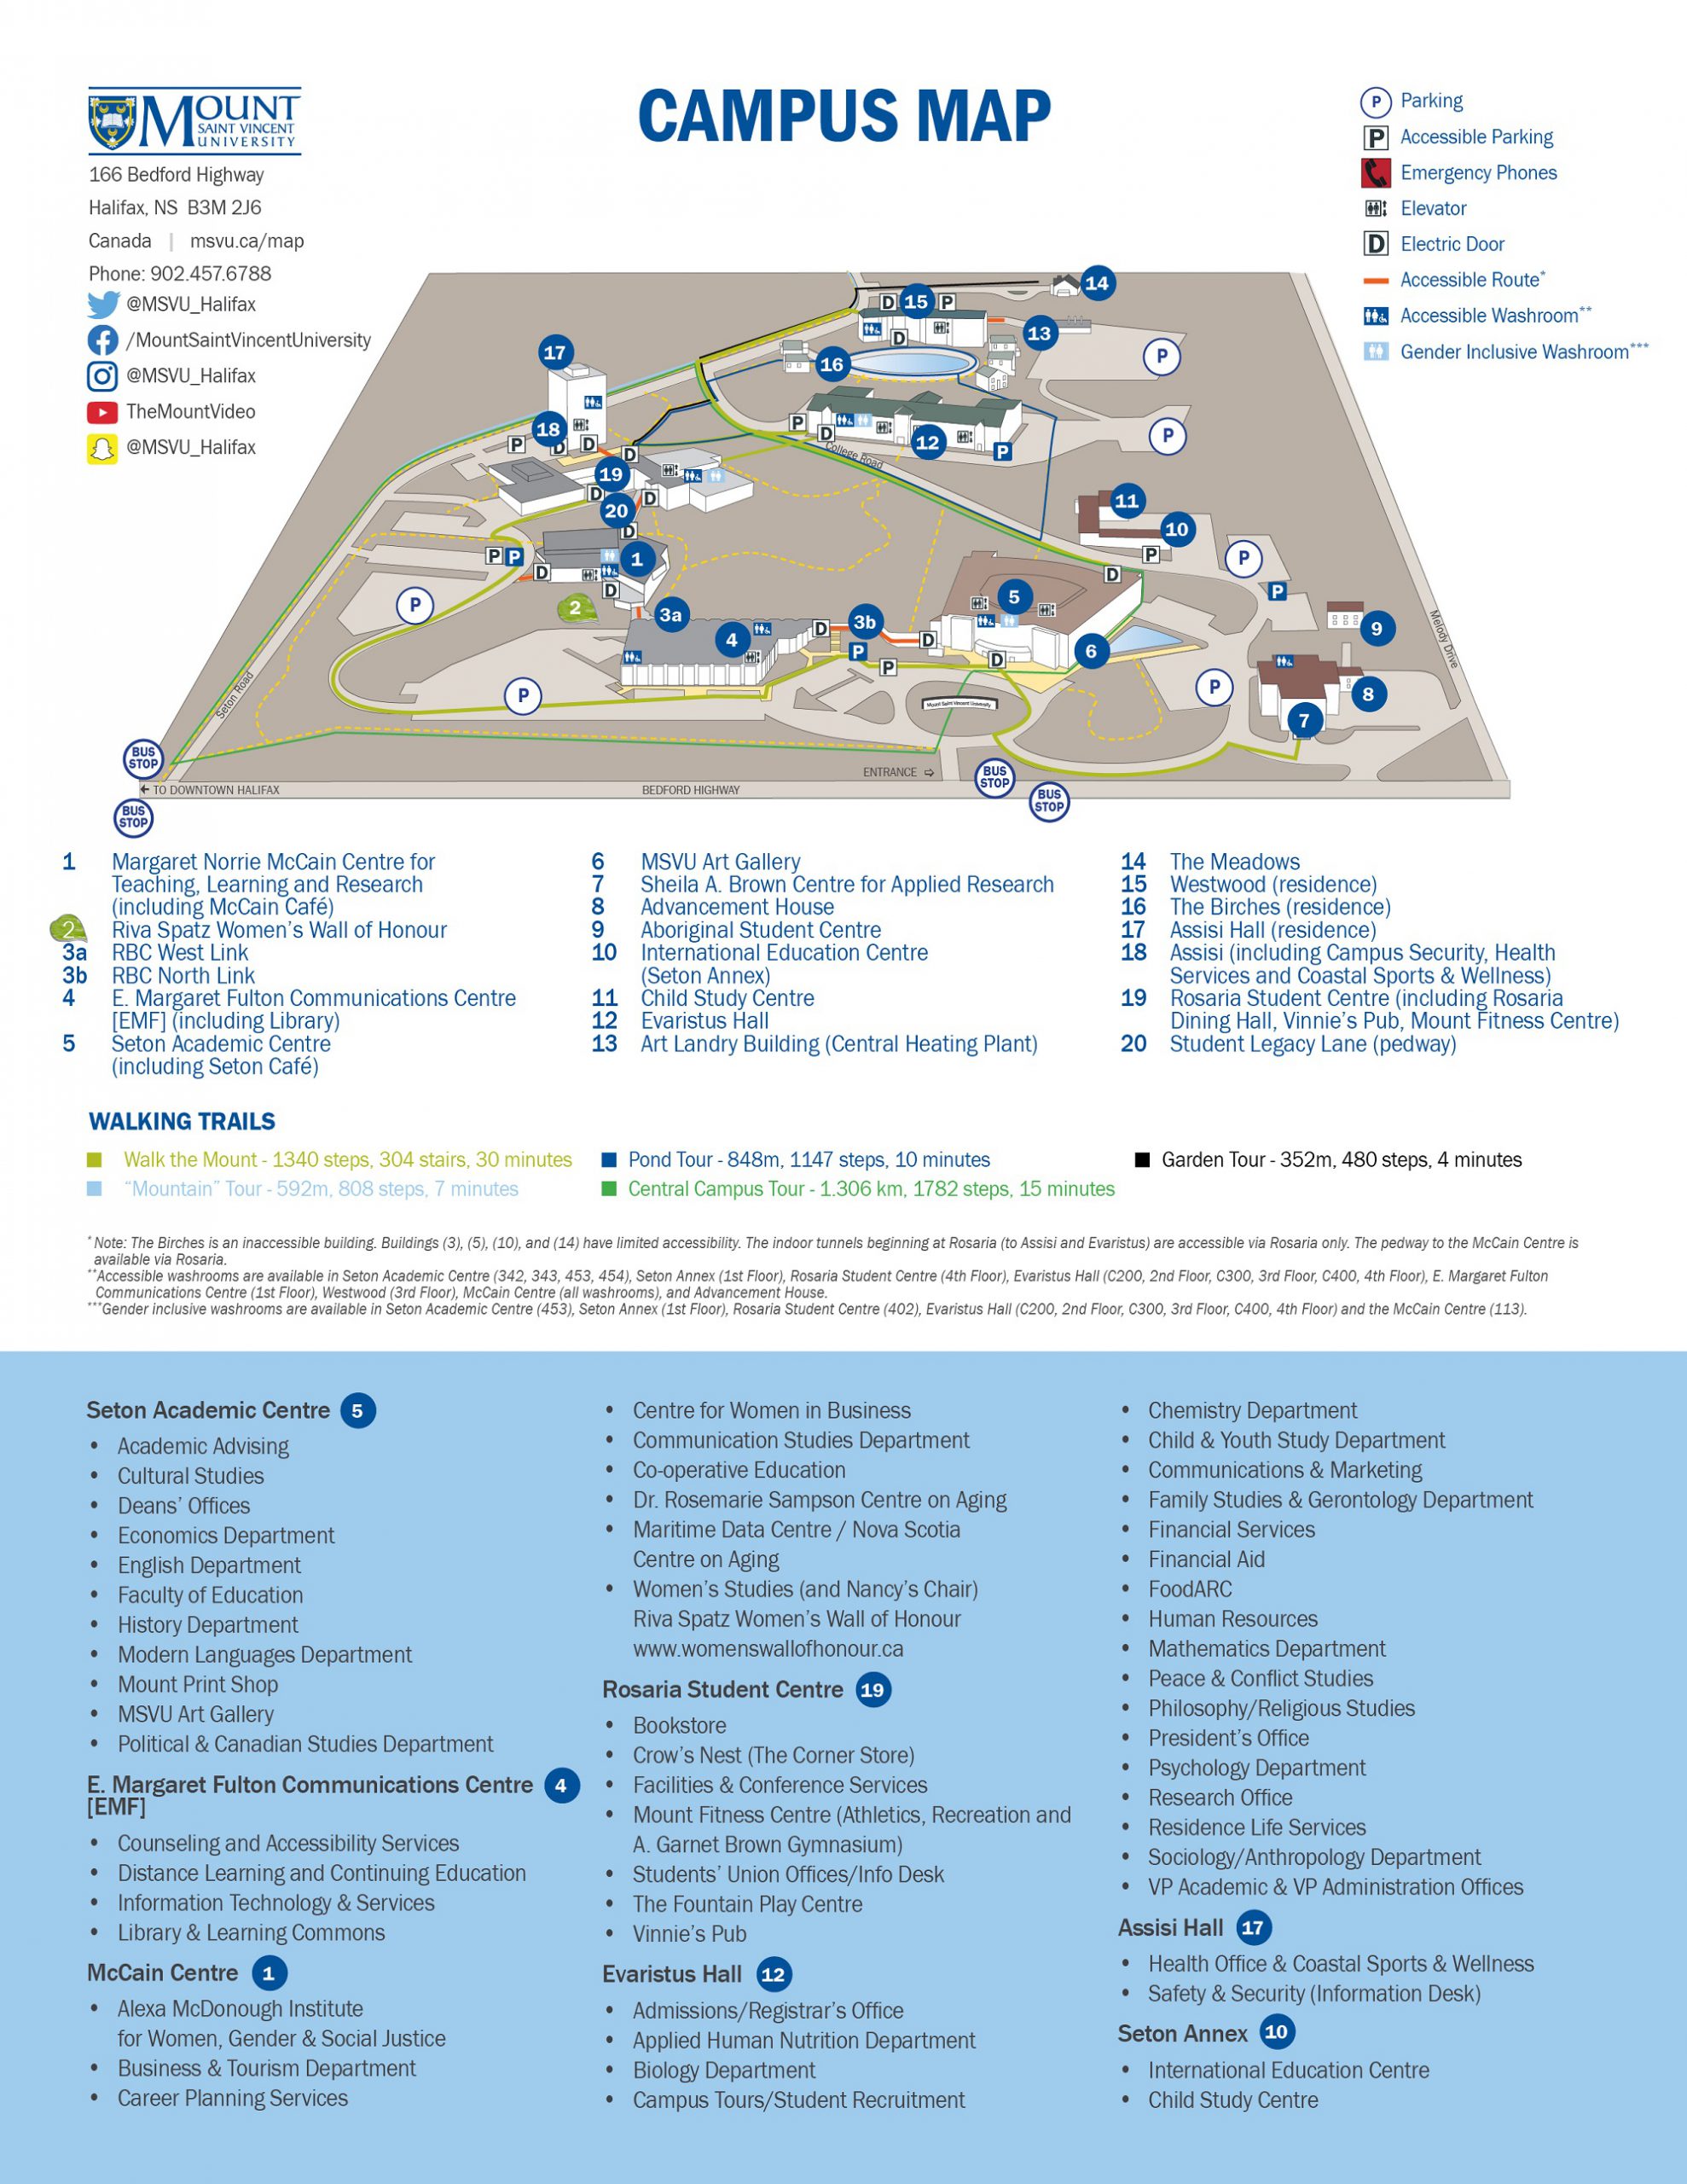 The Mount Saint Vincent University Campus Map (Accessible version available as a PDF)